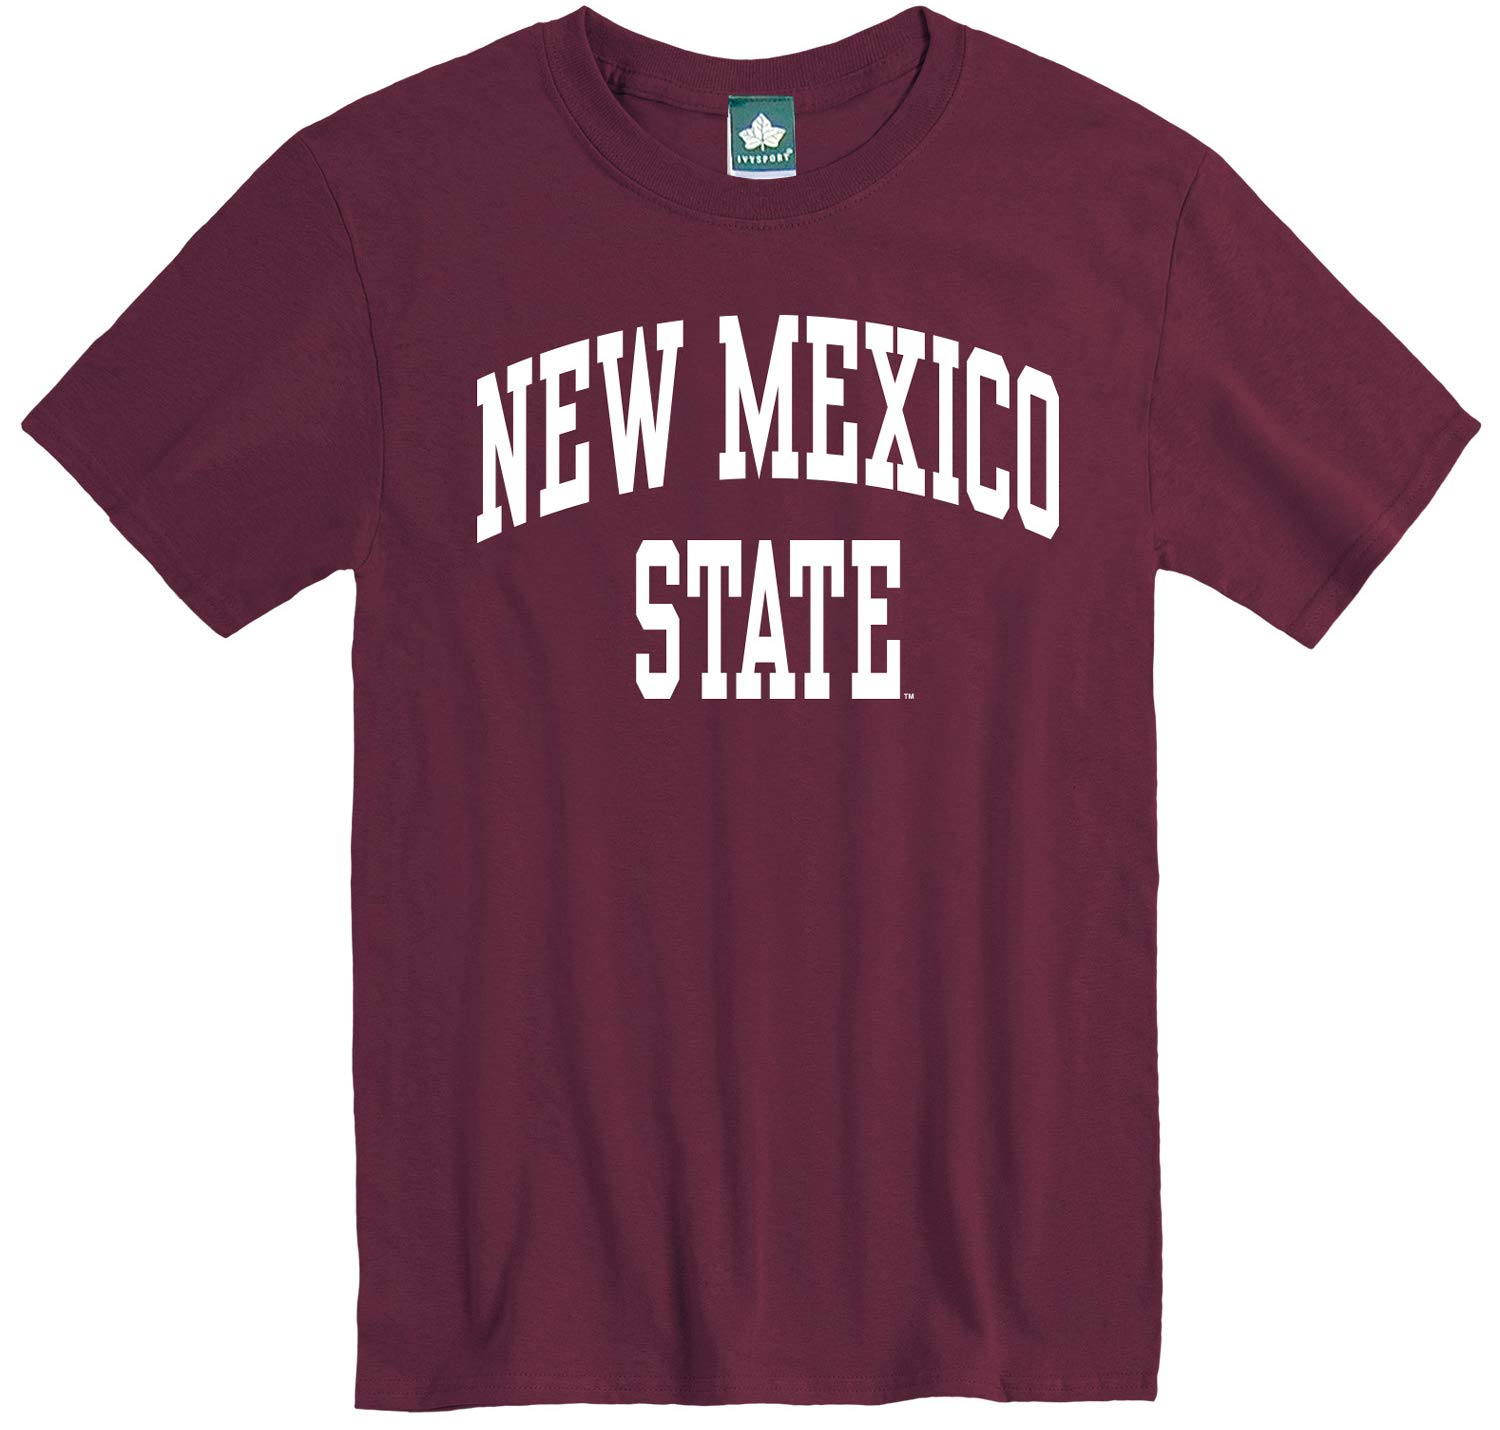 Barnesmith New Mexico State University NMSU Aggies Short Sleeve Adult Unisex T-Shirt, Classic, Maroon, Large